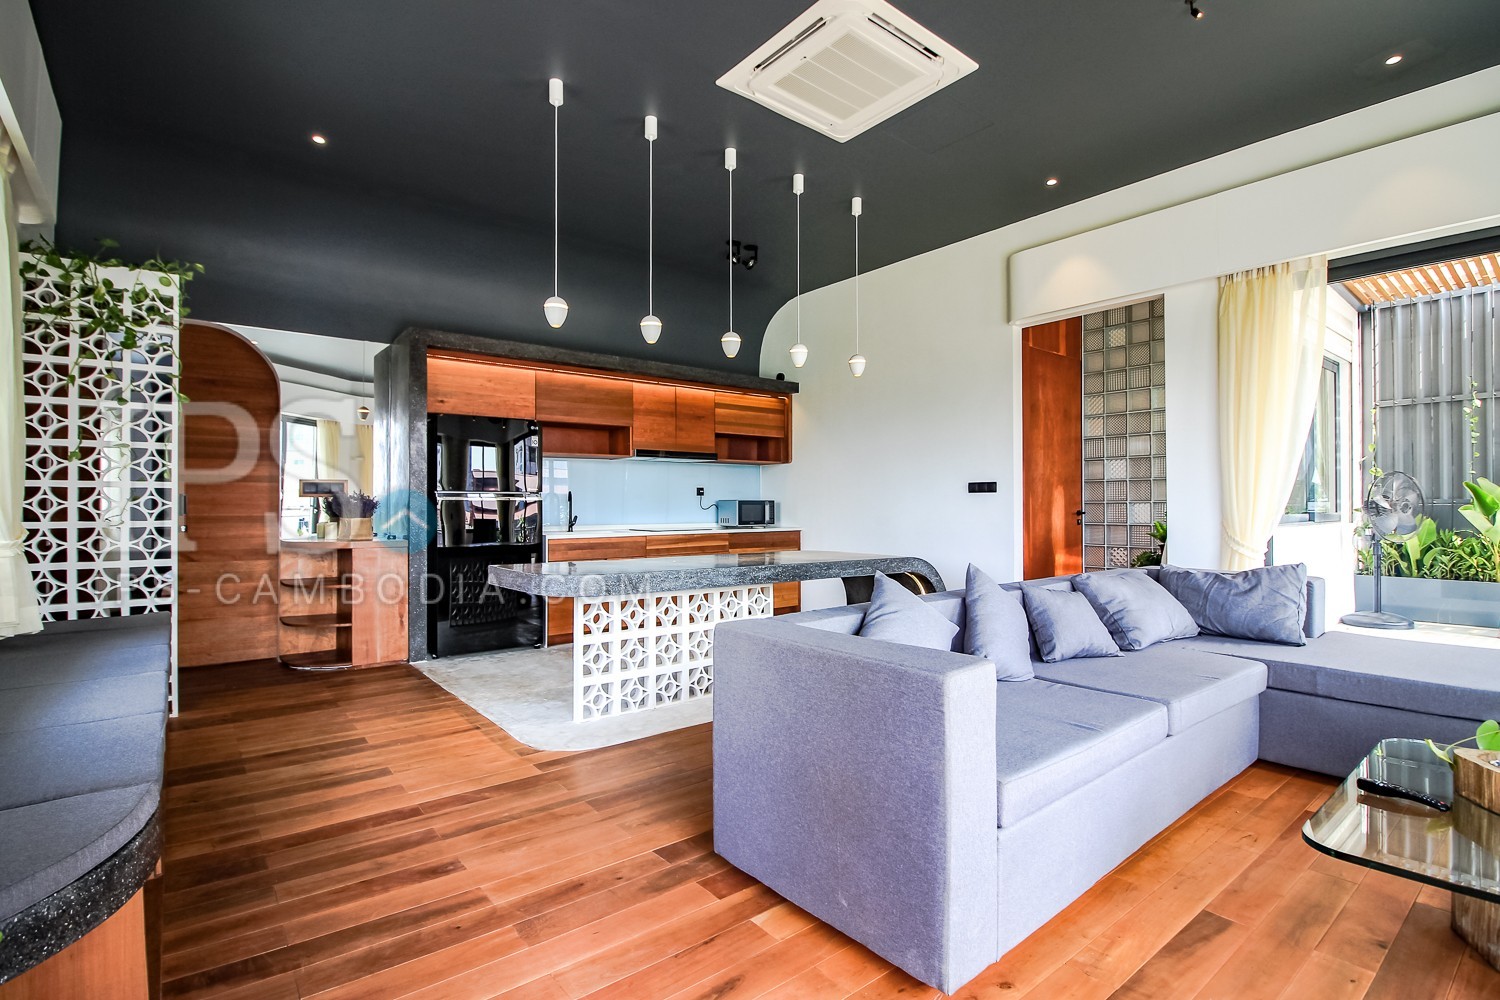 2 Bedroom Renovated Flat For Rent Wat Phnom Penh 10367 | IPS Cambodia